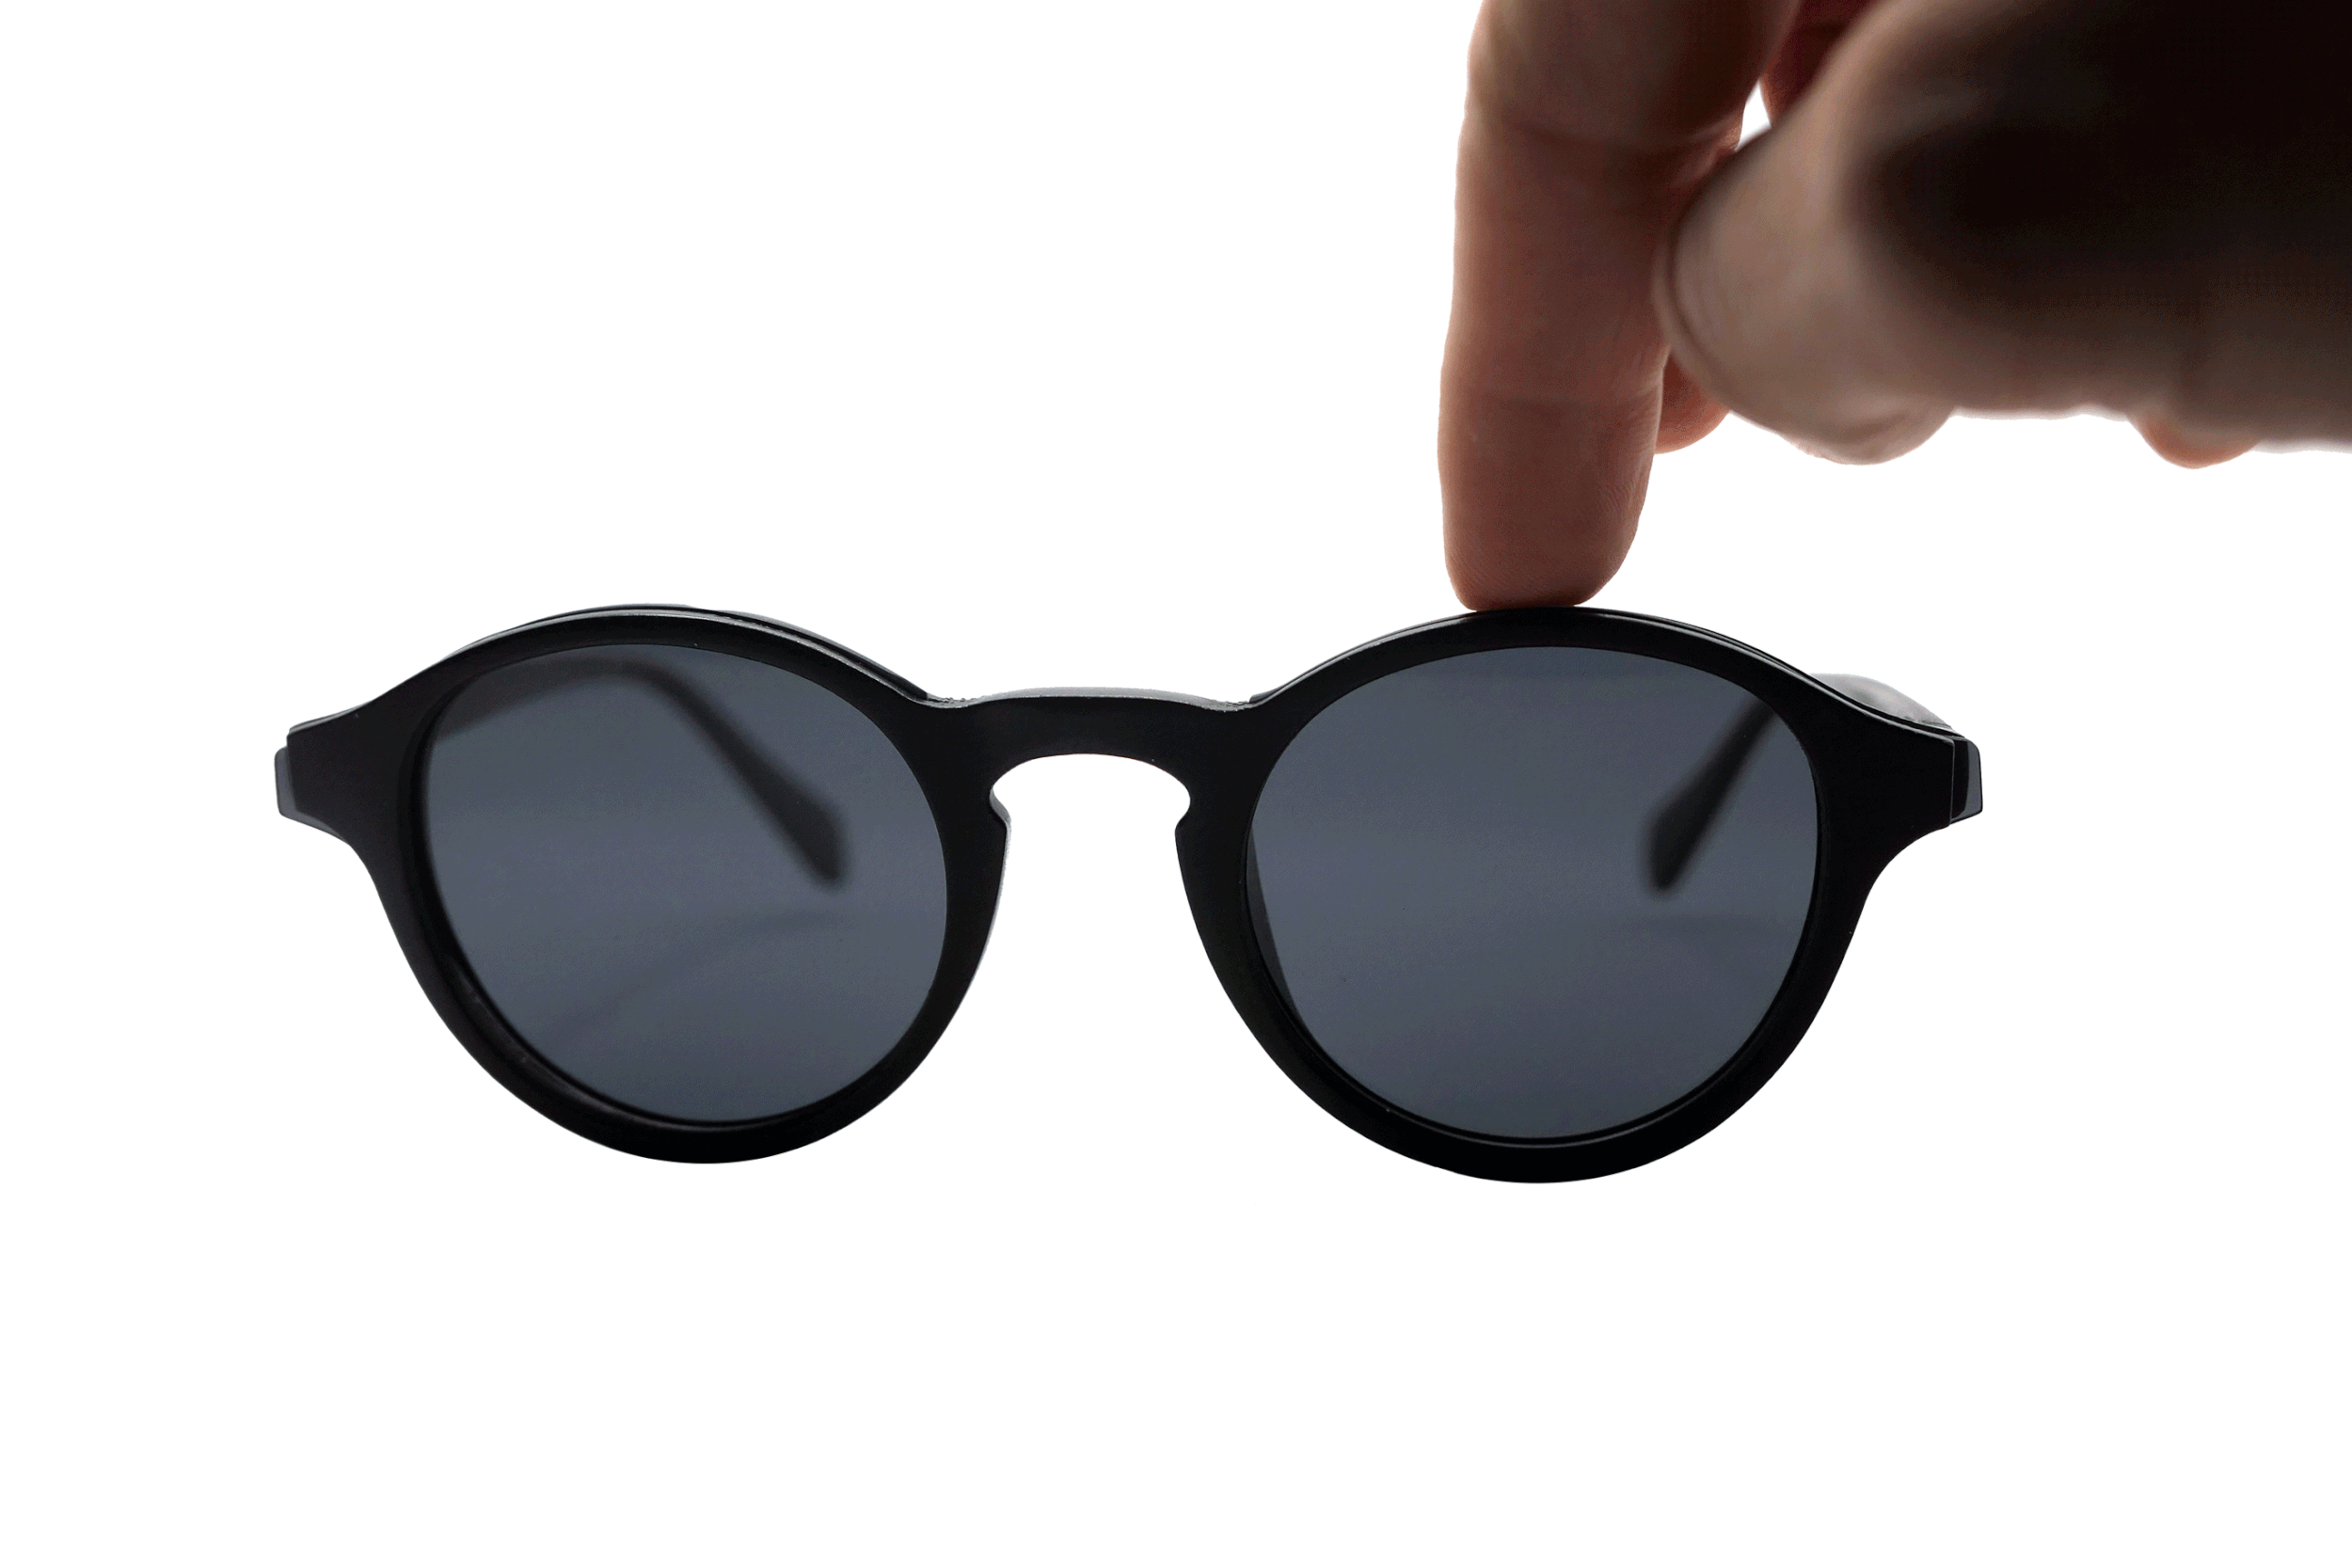 AVIEW Interchangeable Sunglasses